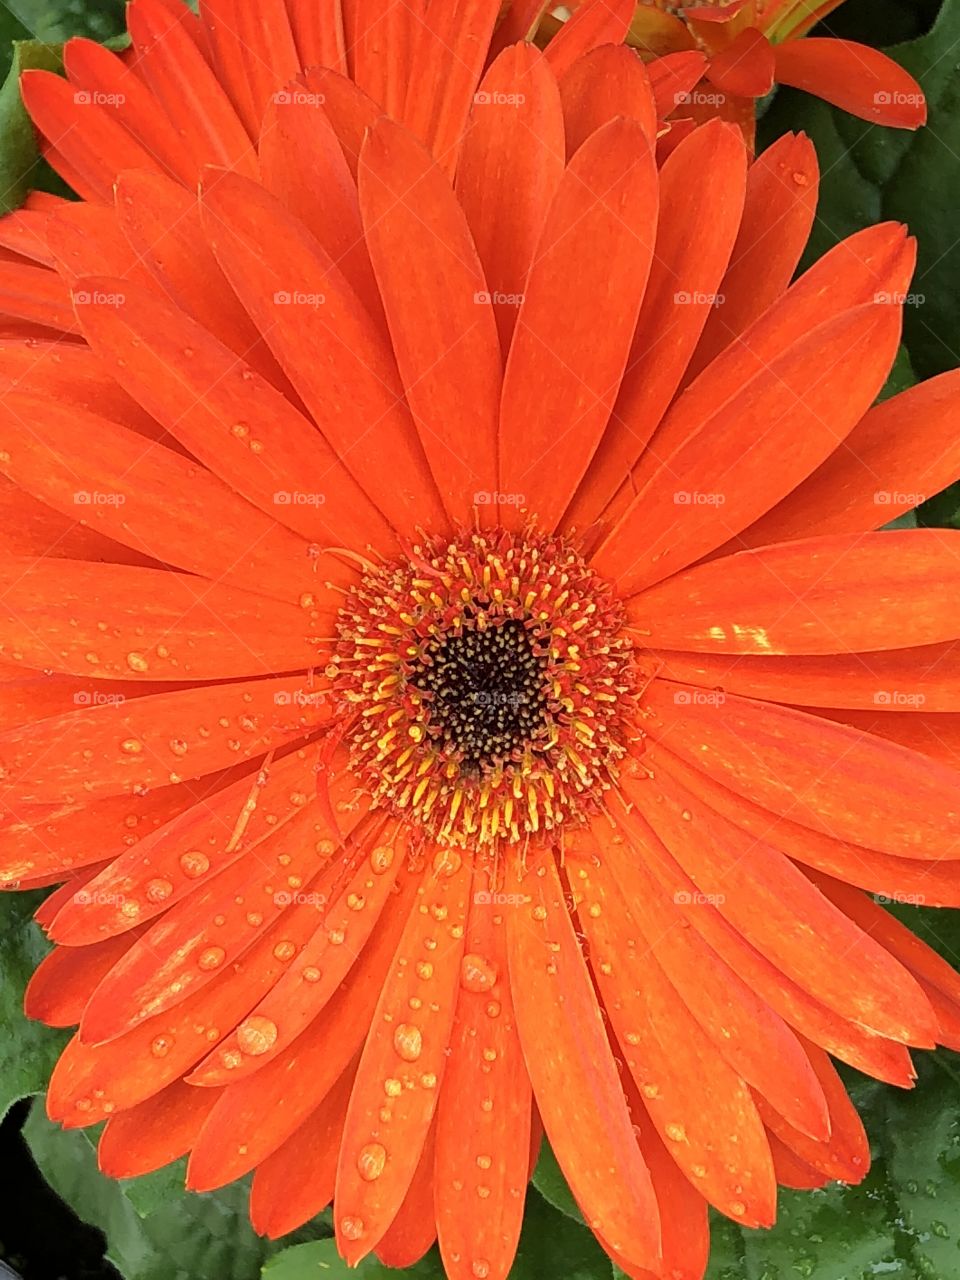 Orange gerbera daisy with rain drops 